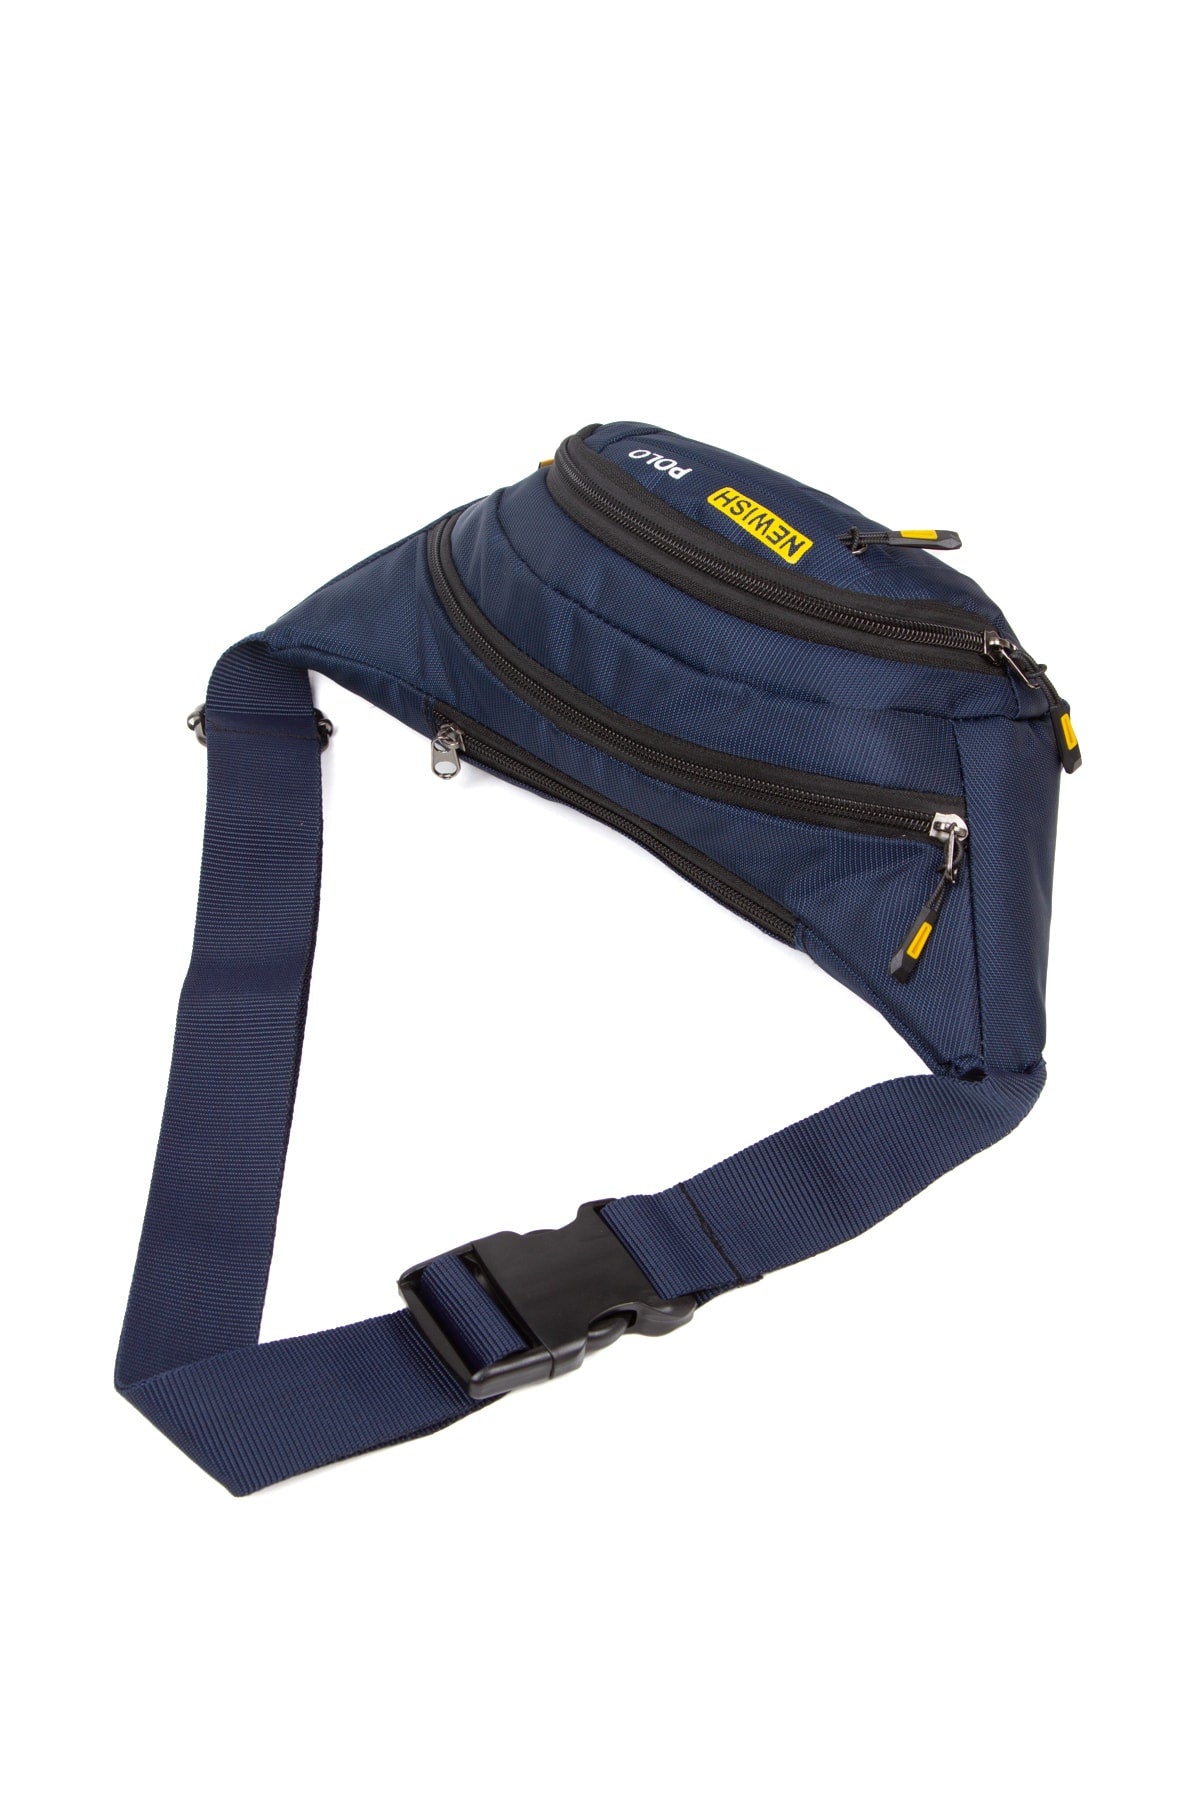 Unisex Impertex Fabric Headphone Outlet Waterproof Shoulder And Waist Bag Cross Strap Navy Blue